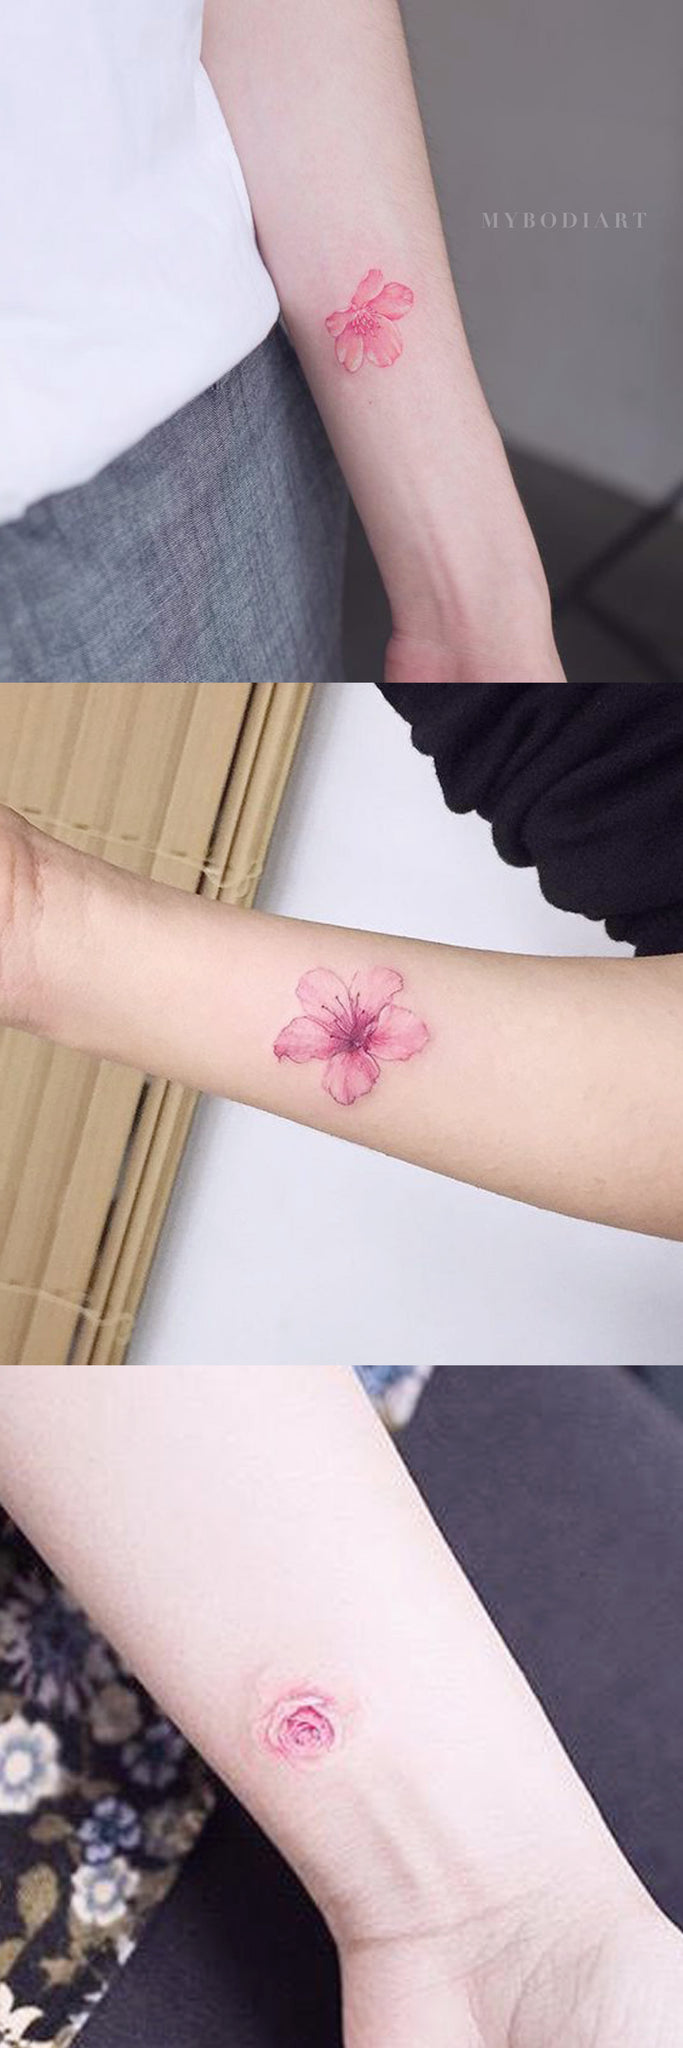 Pink Watercolor Cherry Blossom Forearm Wrist Tattoo Ideas for Women Small Pink Floral Flower Arm Tattoos -  ideas del tatuaje del antebrazo de la flor de cerezo rosa acuarela - www.MyBodiArt.com 